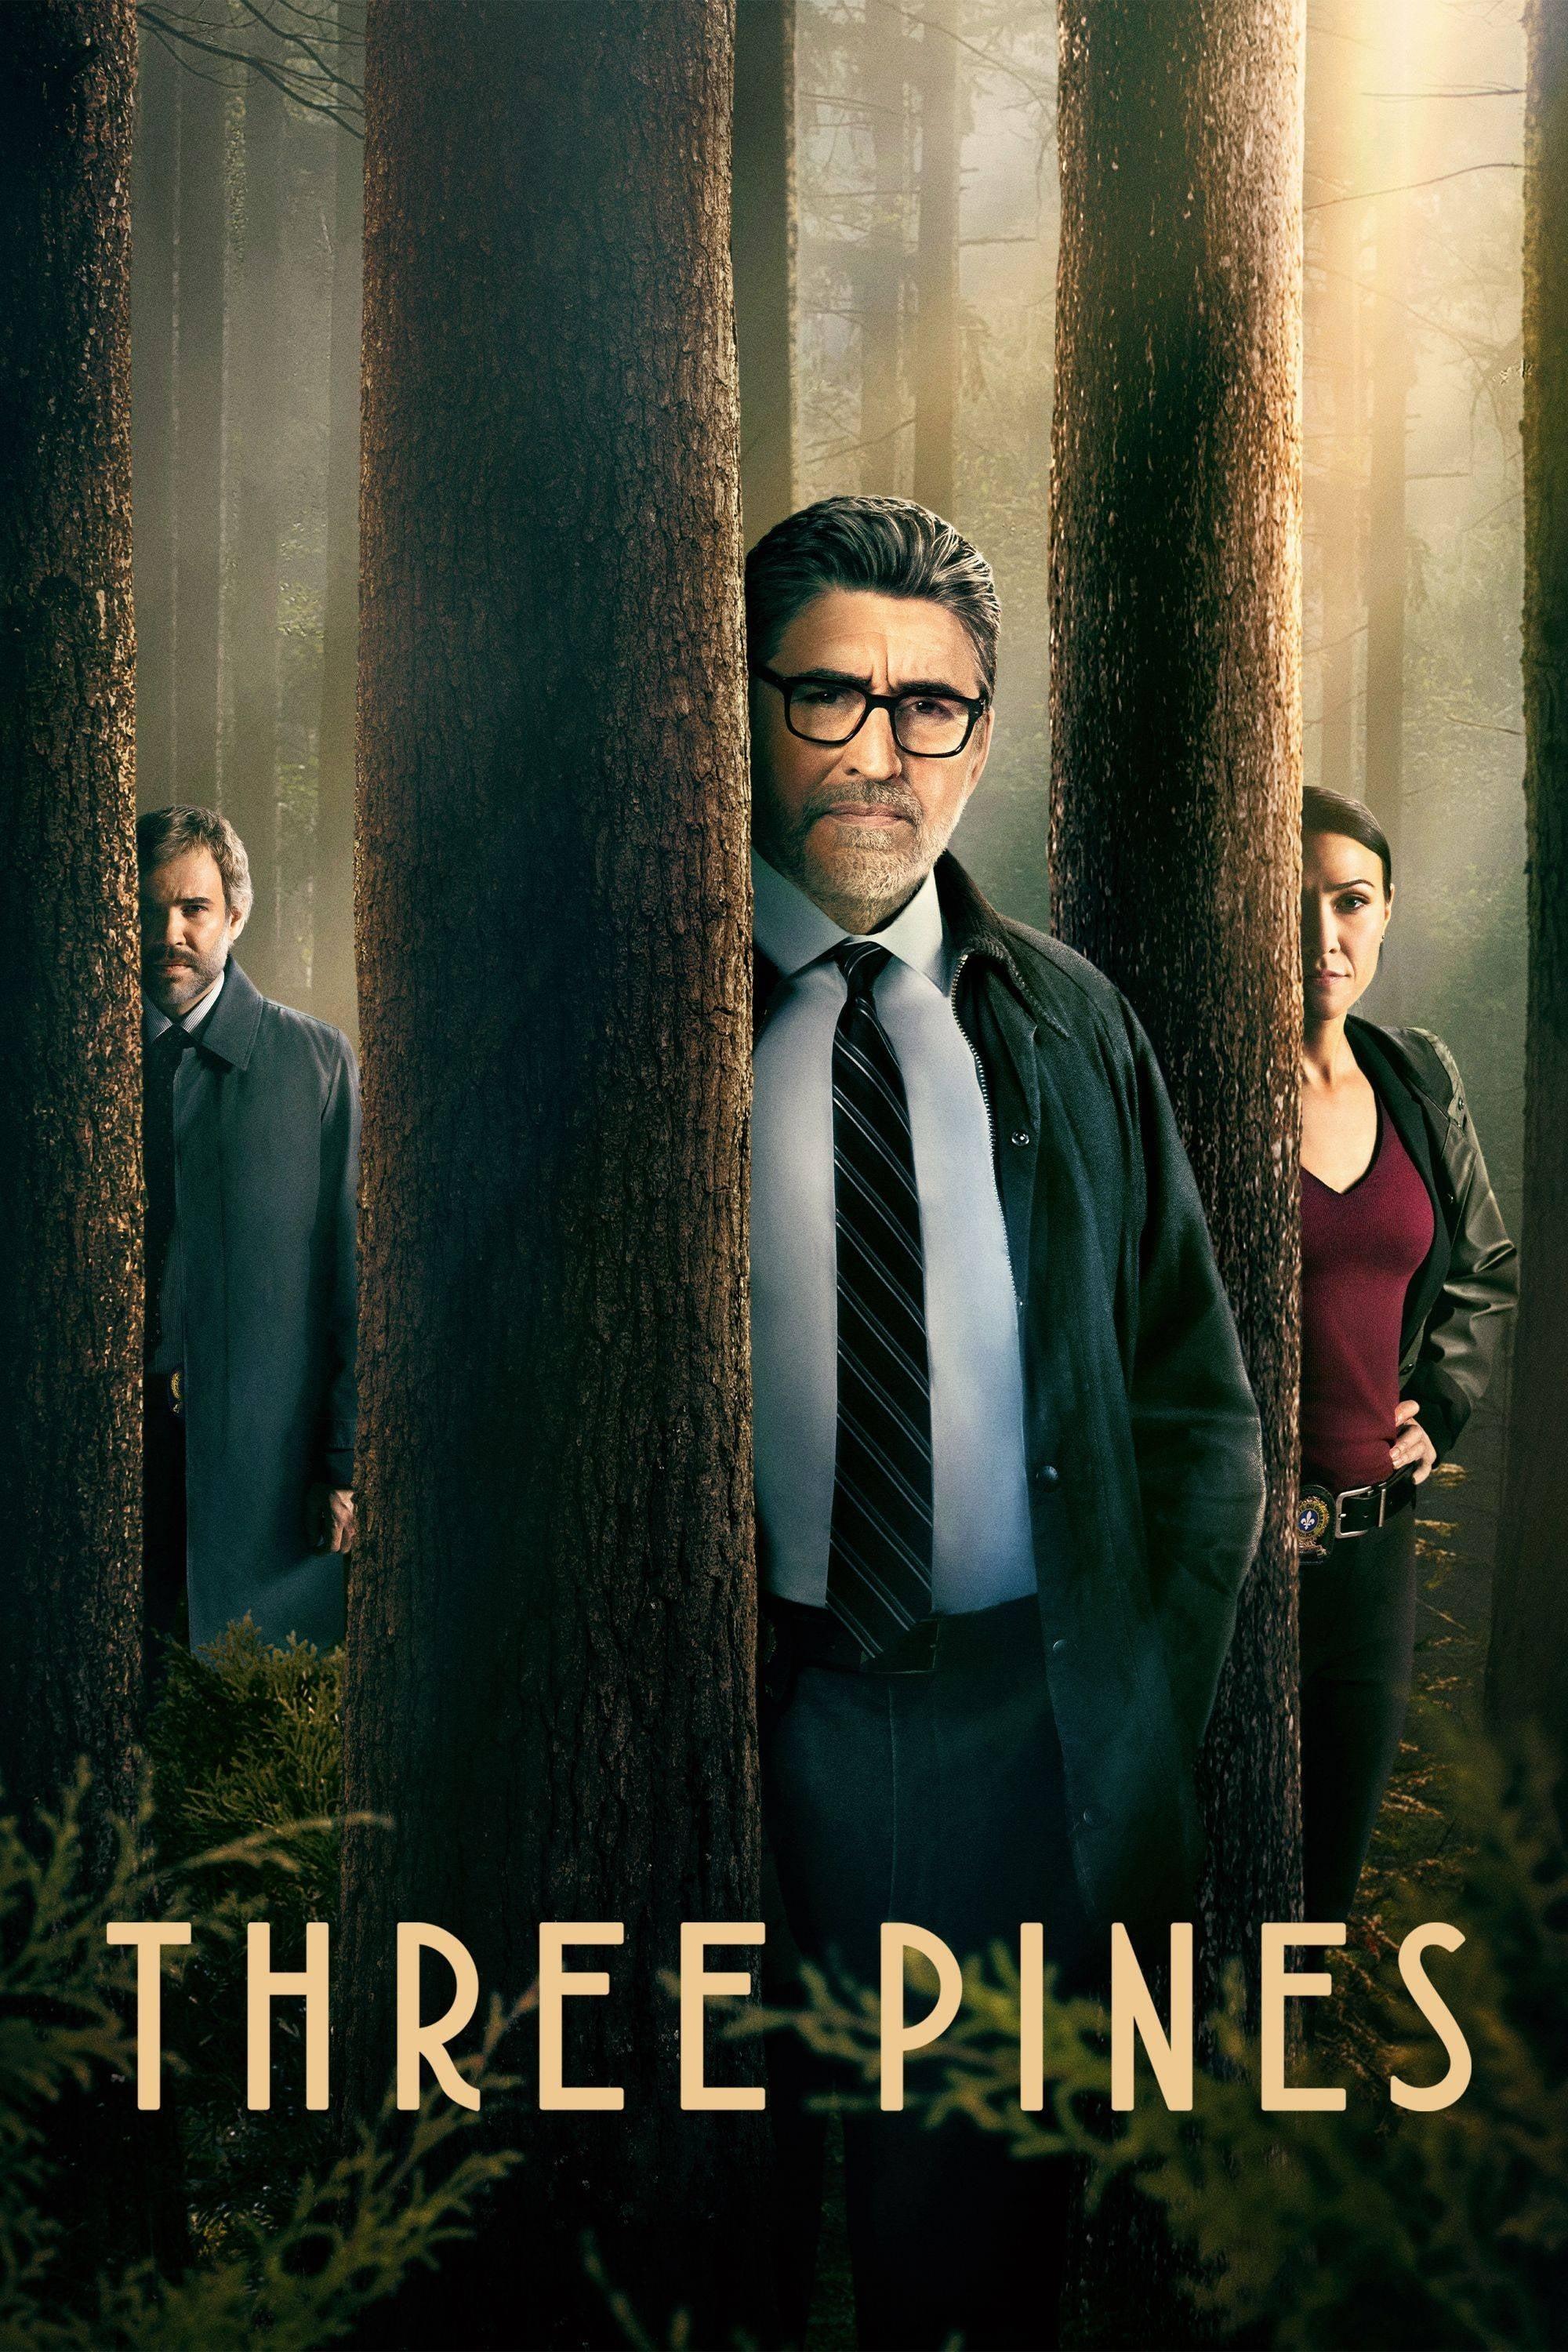 Three Pines poster